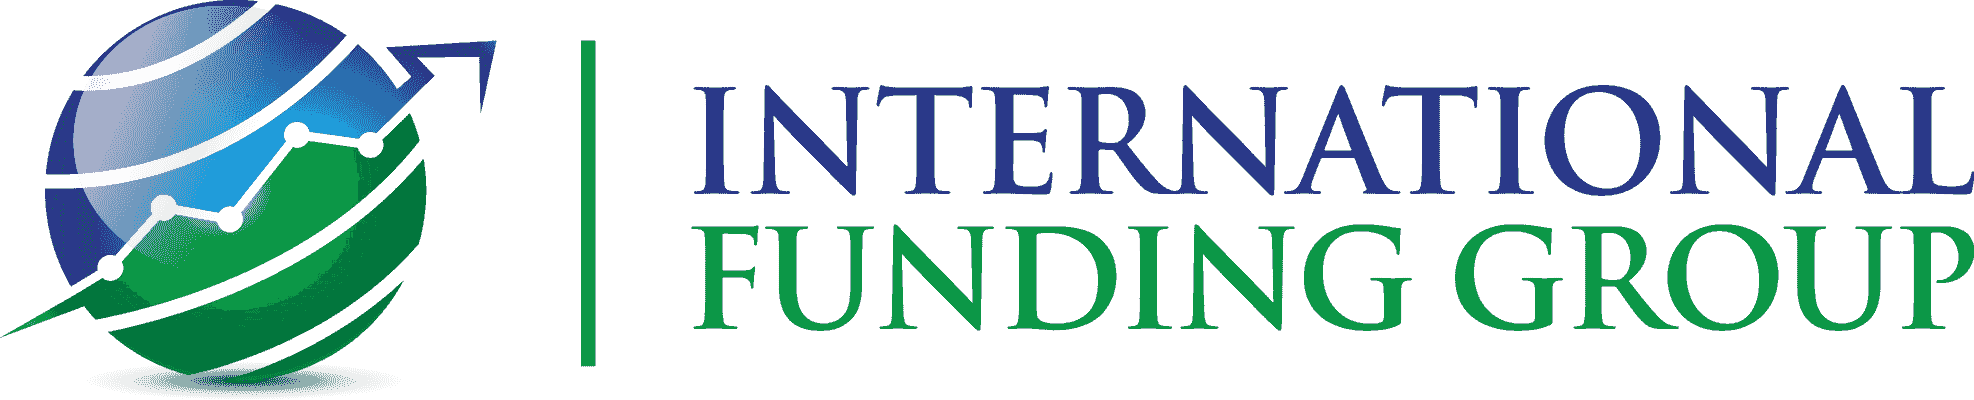 Internationalfundinggroup